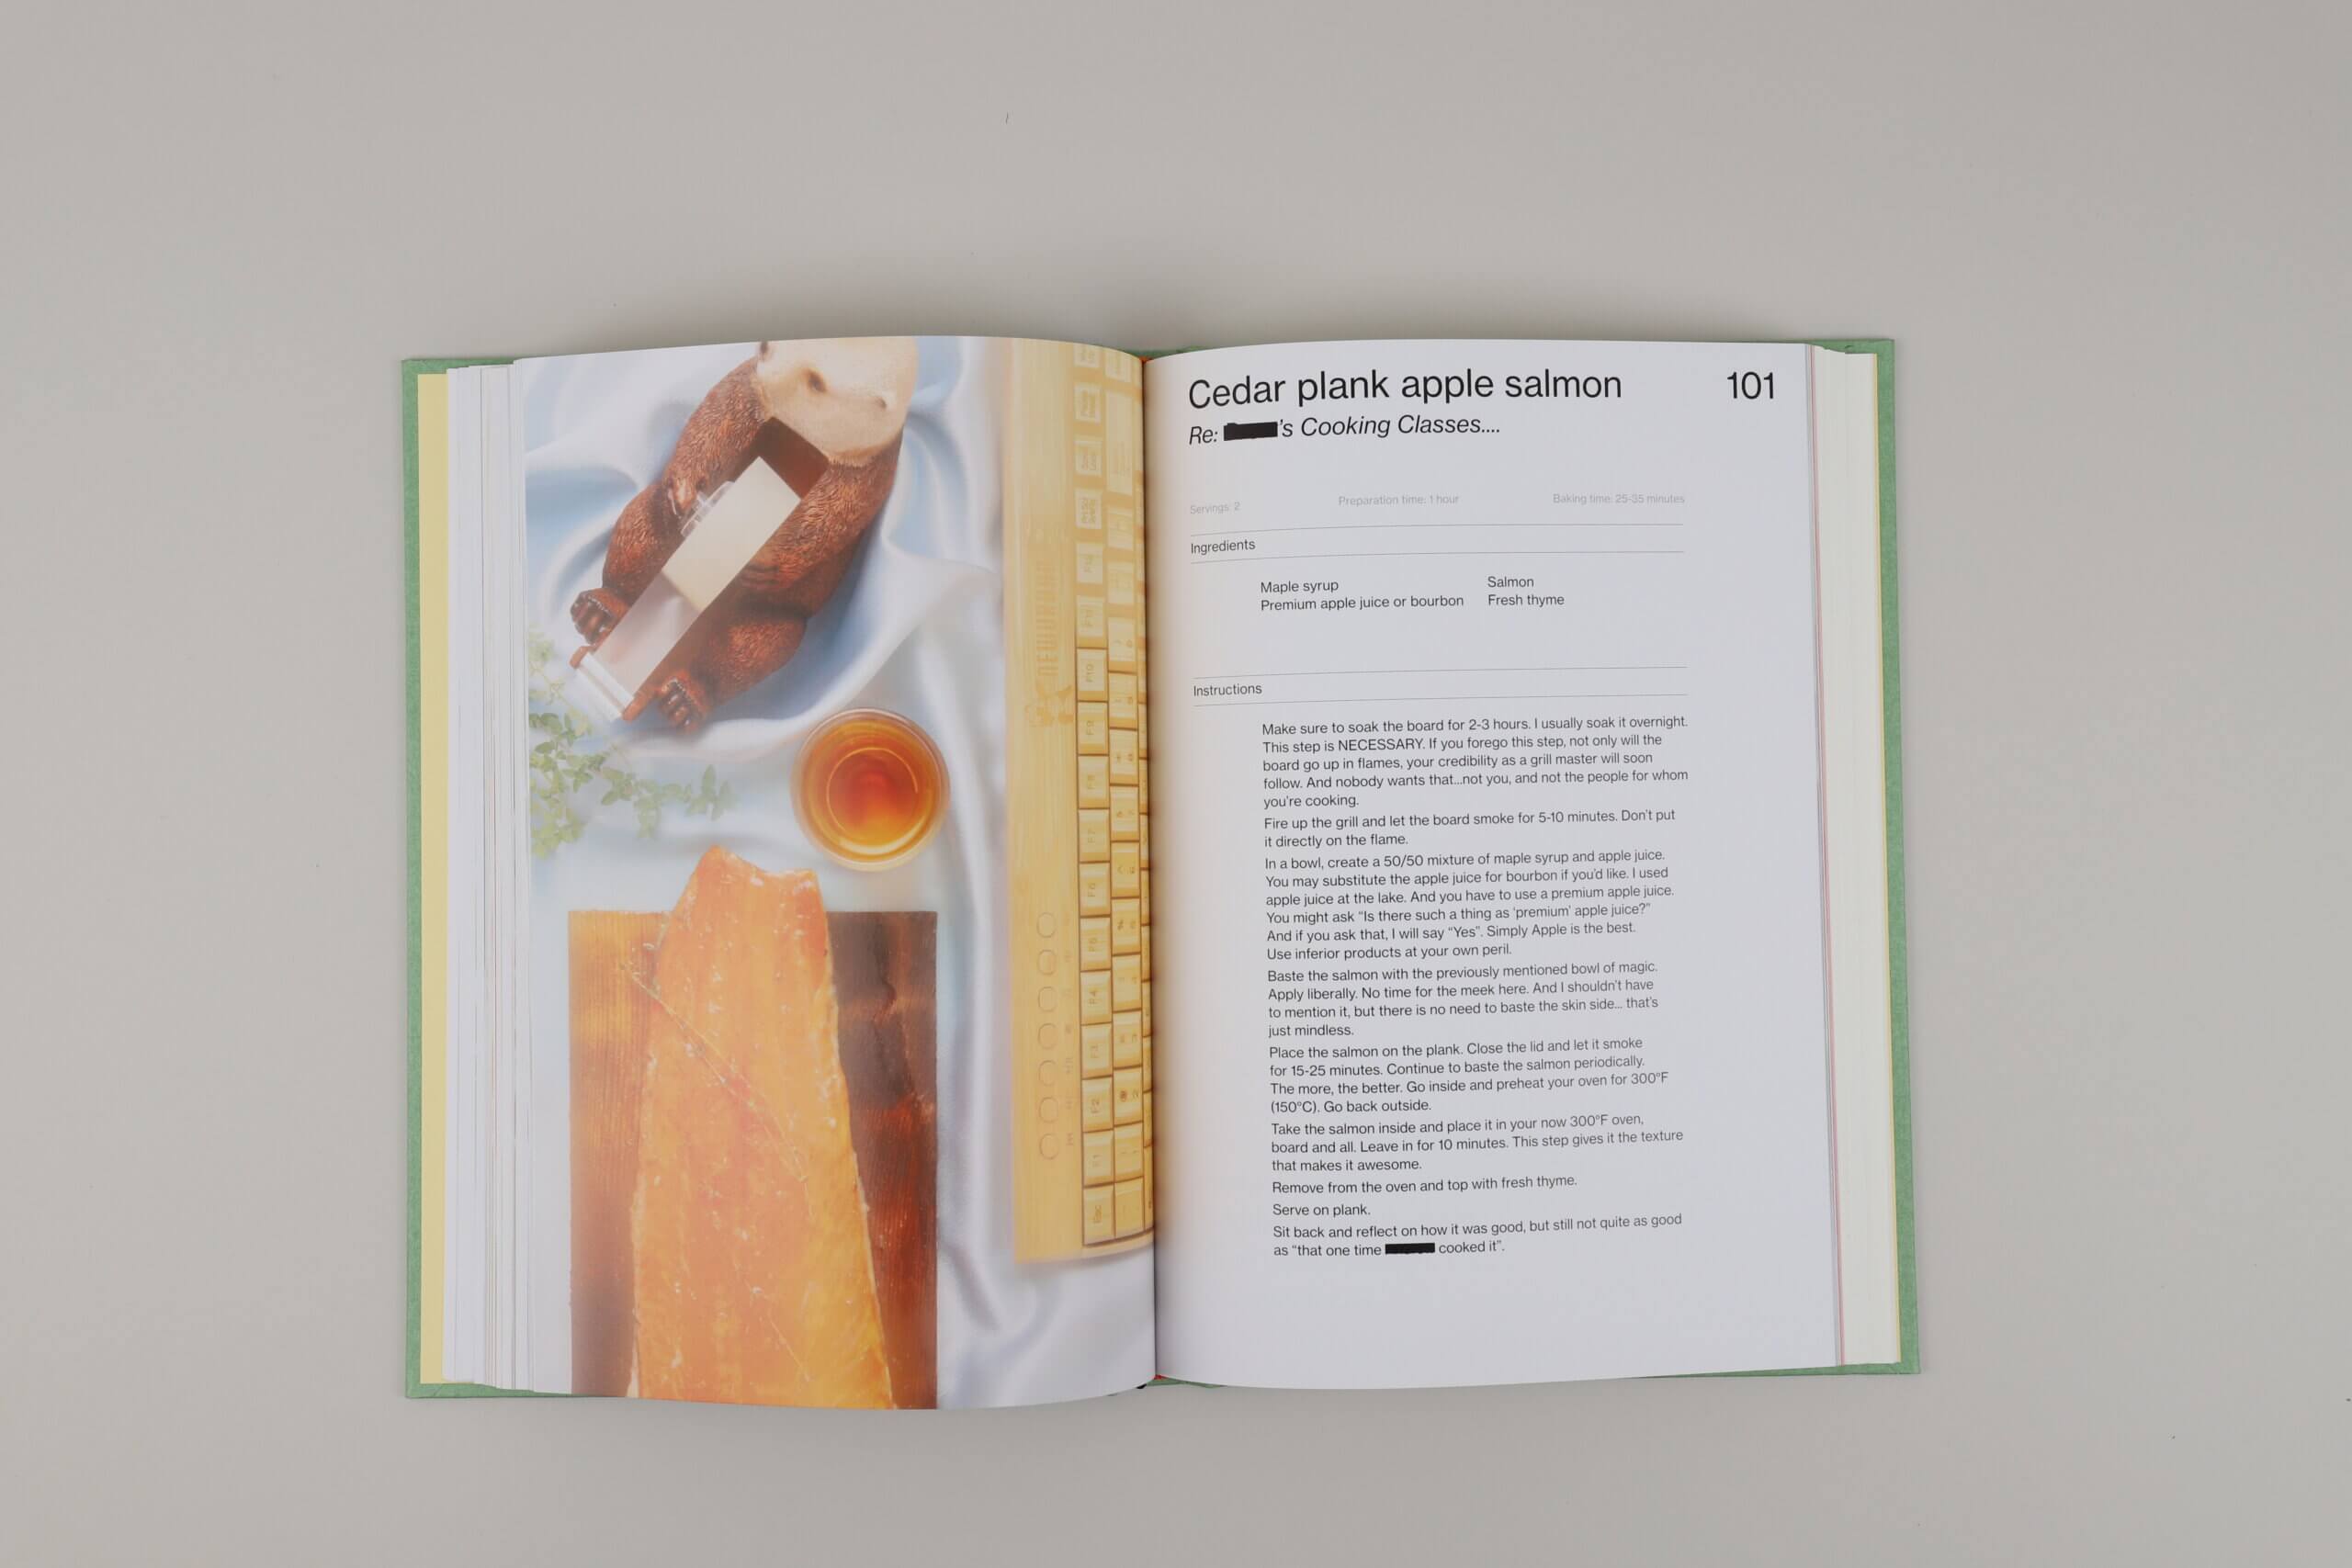 Leaked-recipes-demetria-grace-jbe-books-visuel-3